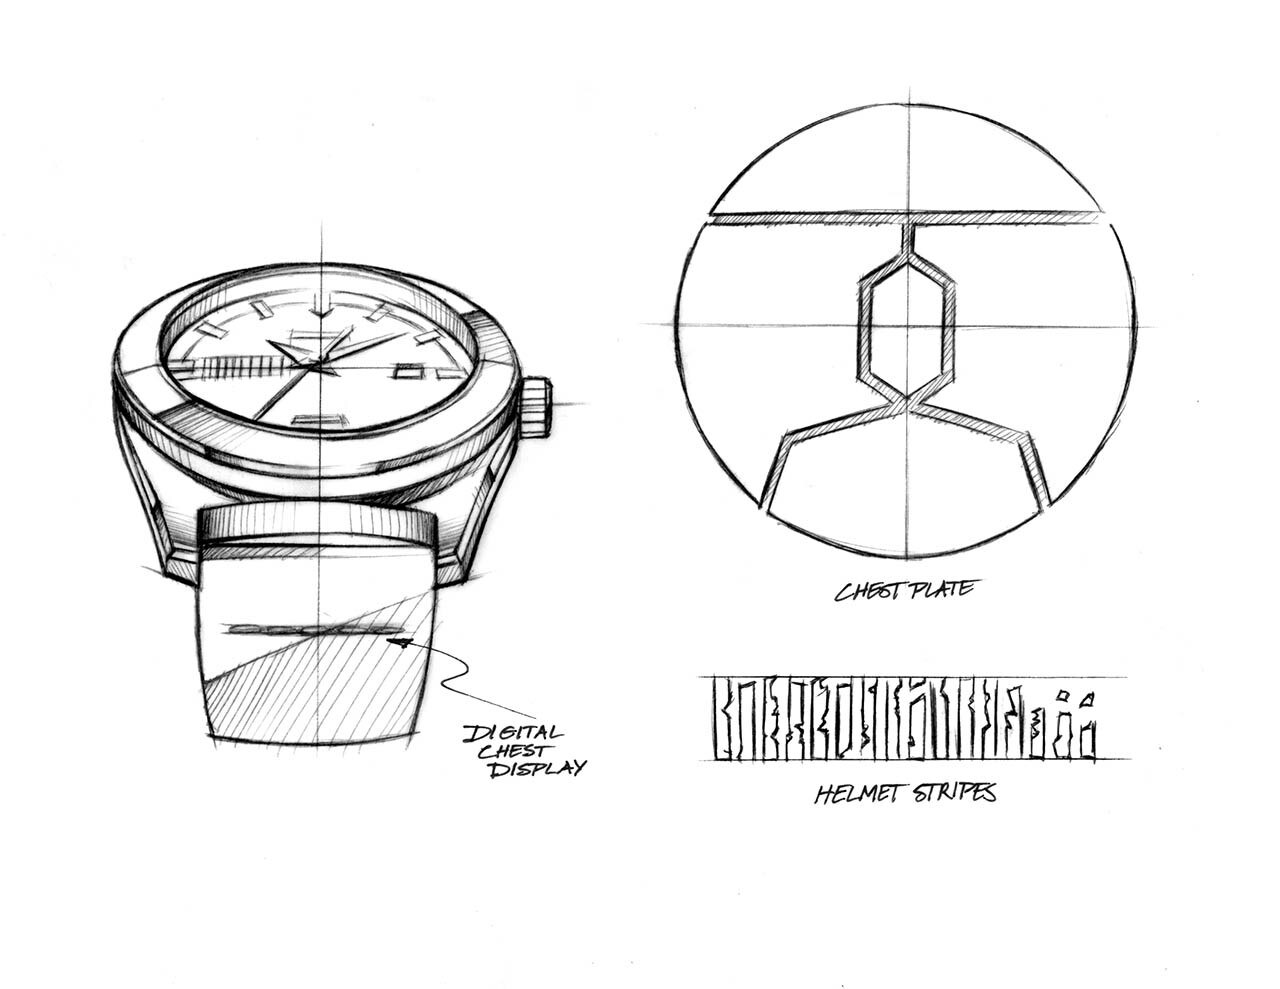 A sketch of a Citizen Star Wars watch